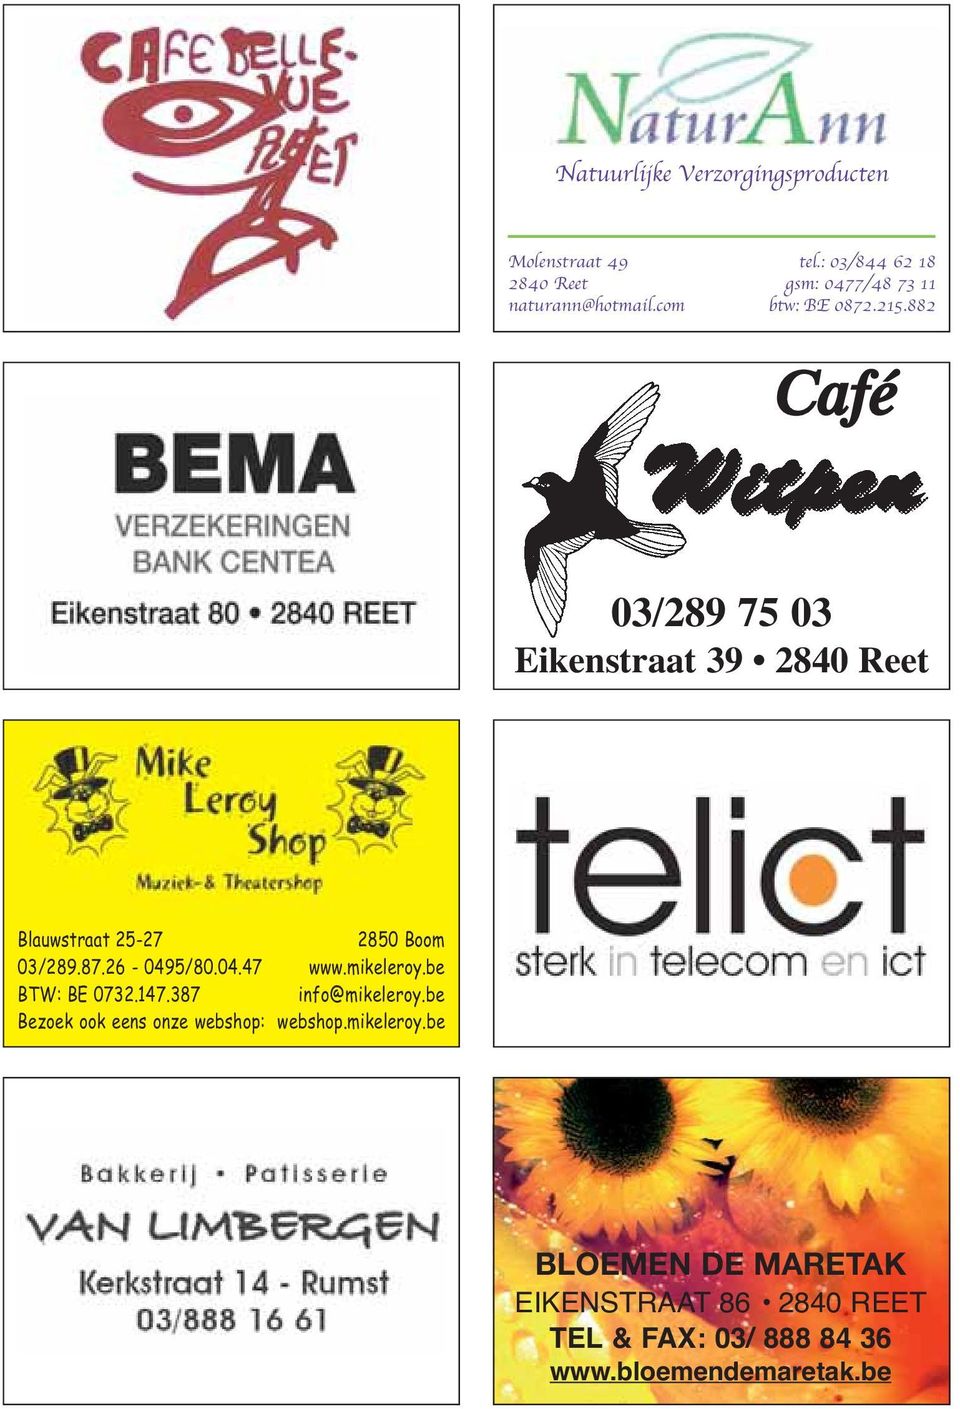 882 Café 03/289 75 03 Eikenstraat 39 2840 Reet Blauwstraat 25-27 2850 Boom 03/289.87.26-0495/80.04.47 www.